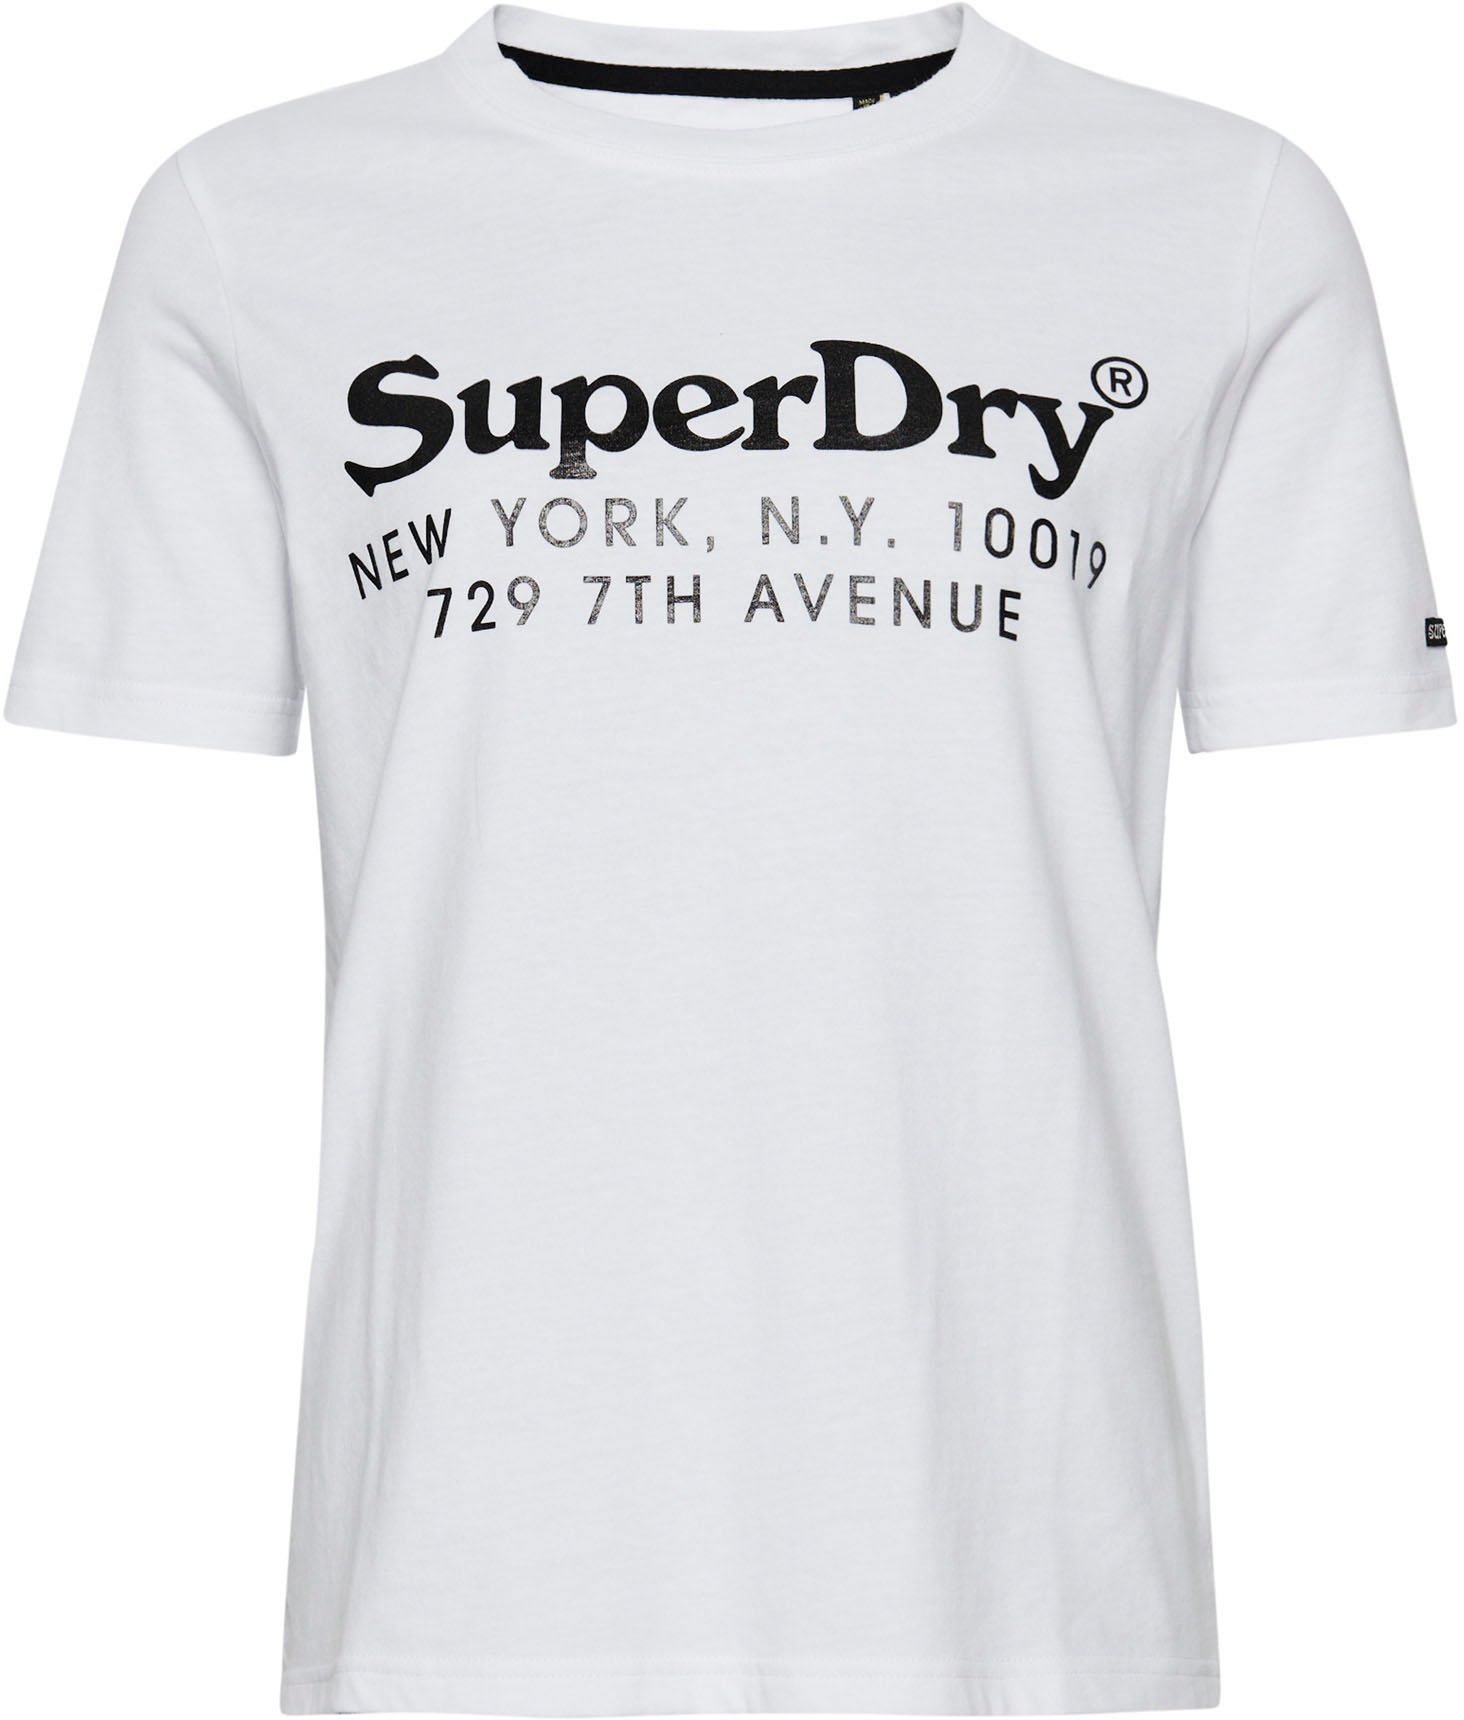 Superdry Kurzarmshirt mit Print Metallic